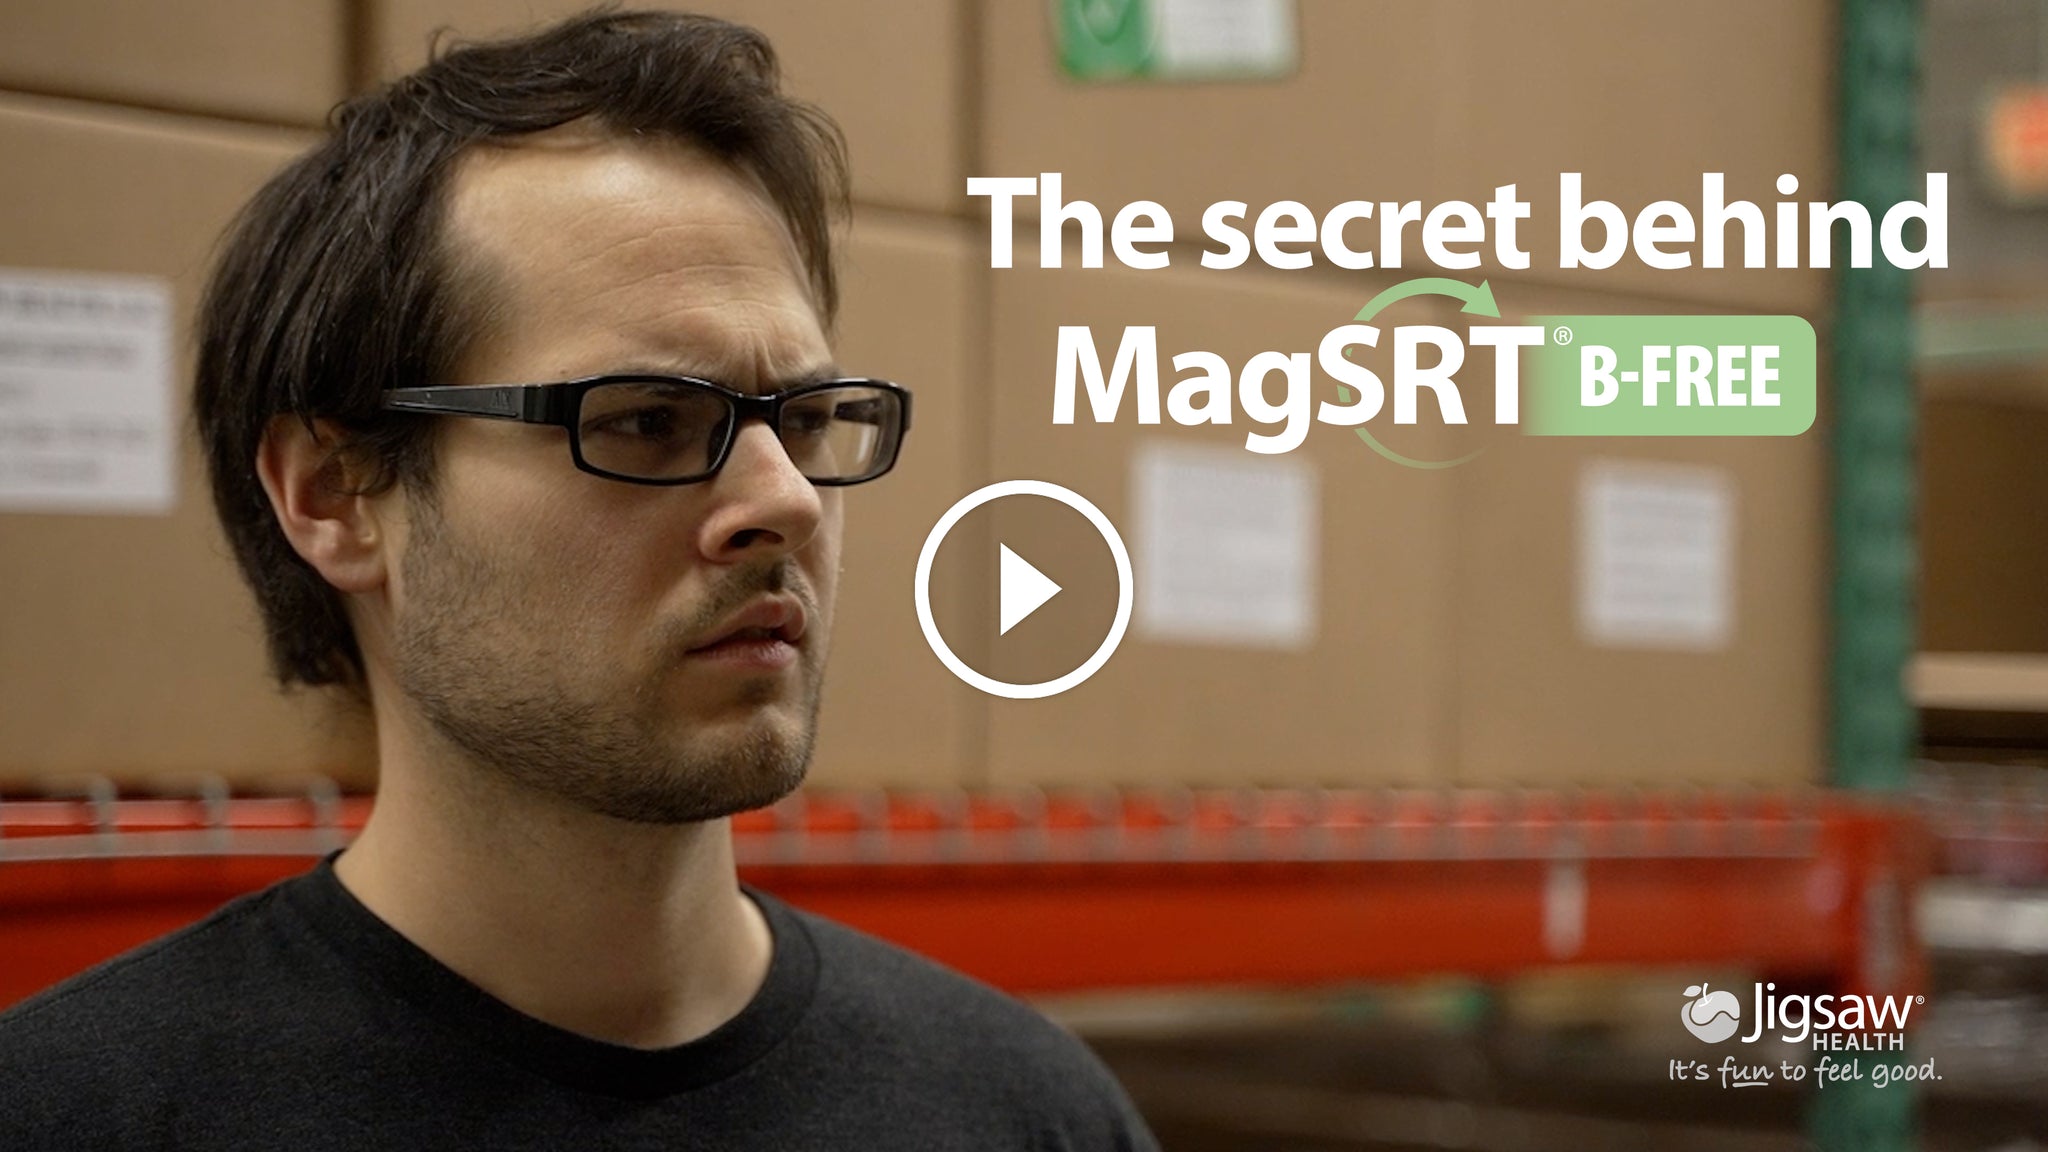 The Secret Behind MagSRT B-Free